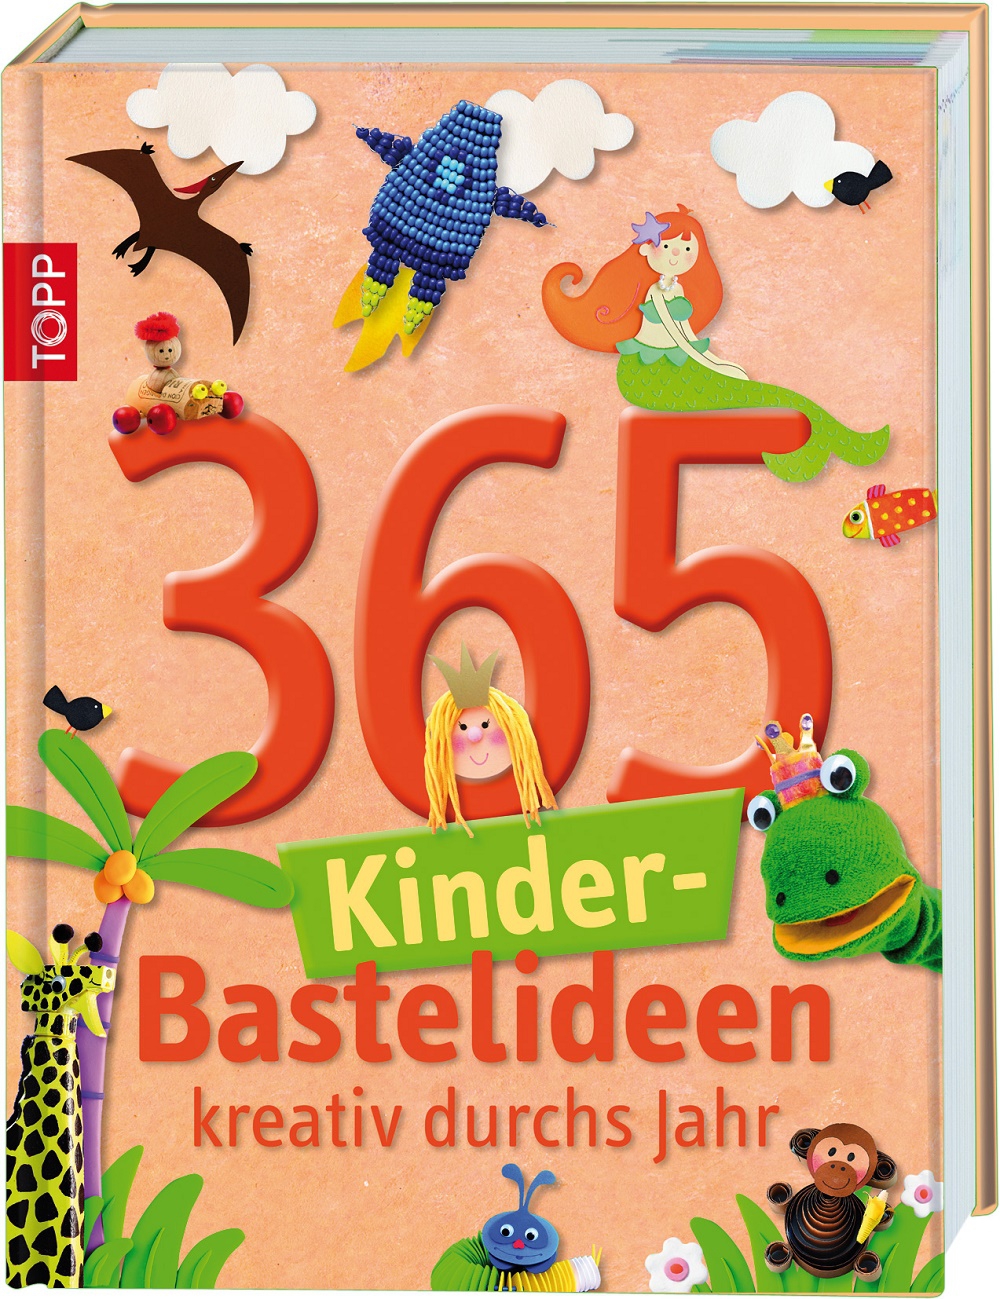 365 Kinder-Bastelideen